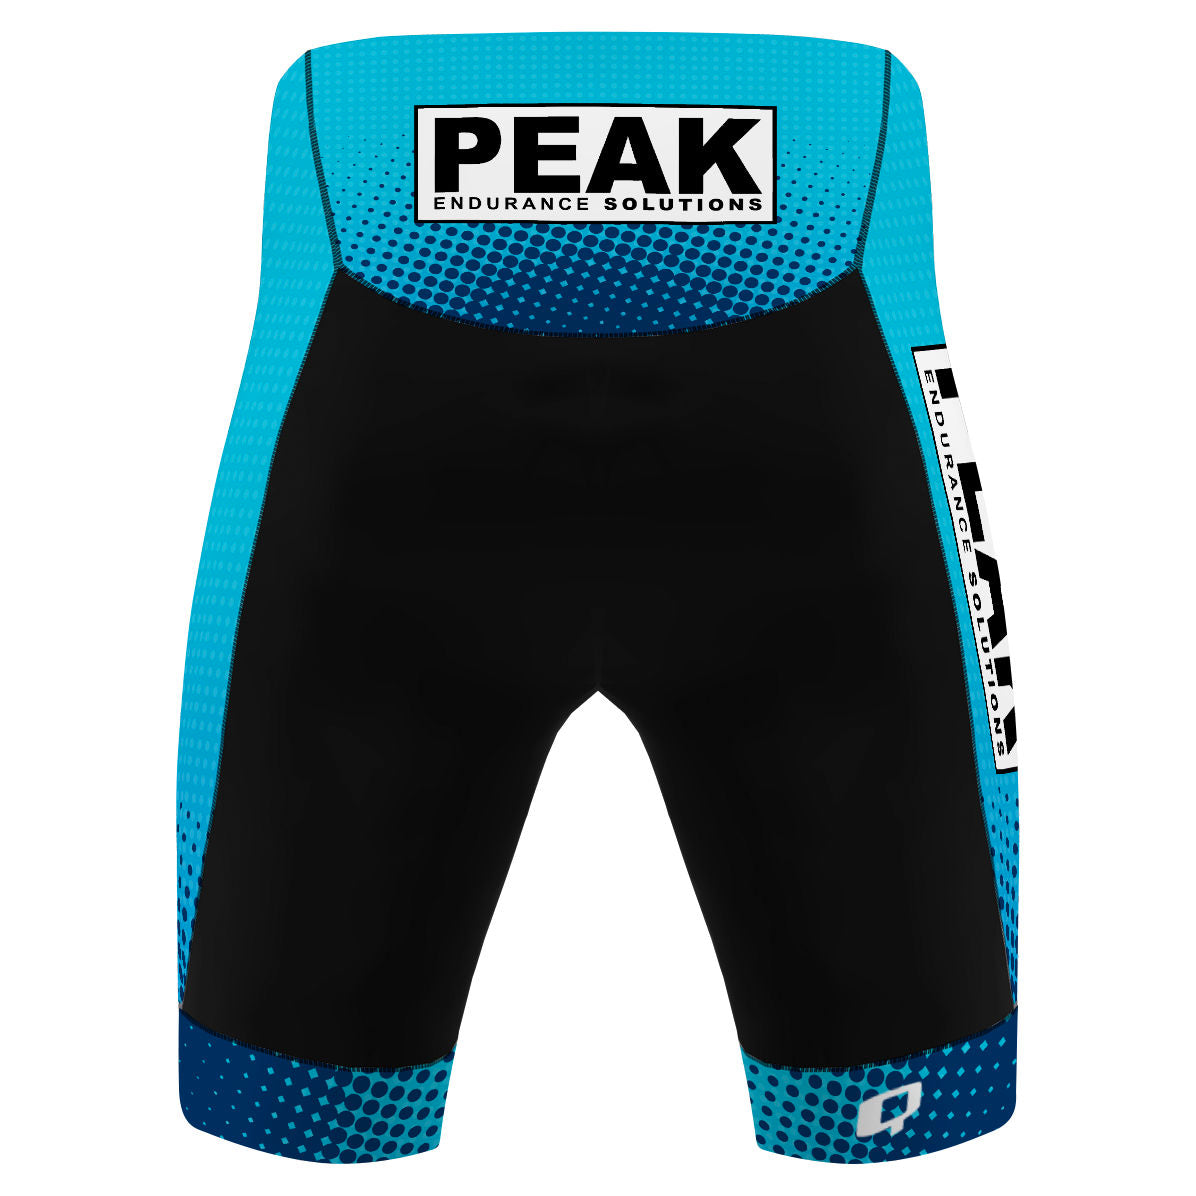 Peak - Men Cycling Shorts